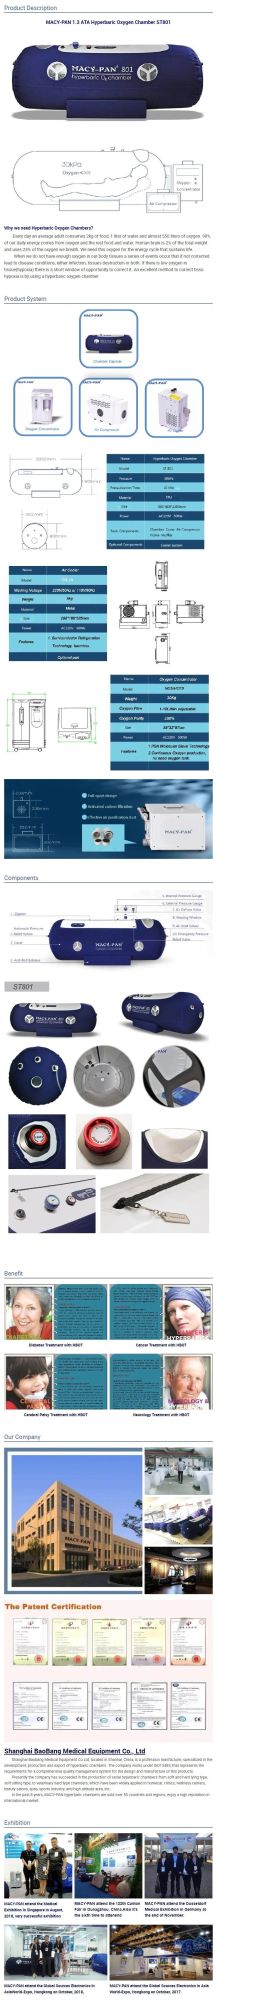 Macypan Hbot Hyperbaric Capsule Cameras Hyperbaric in China